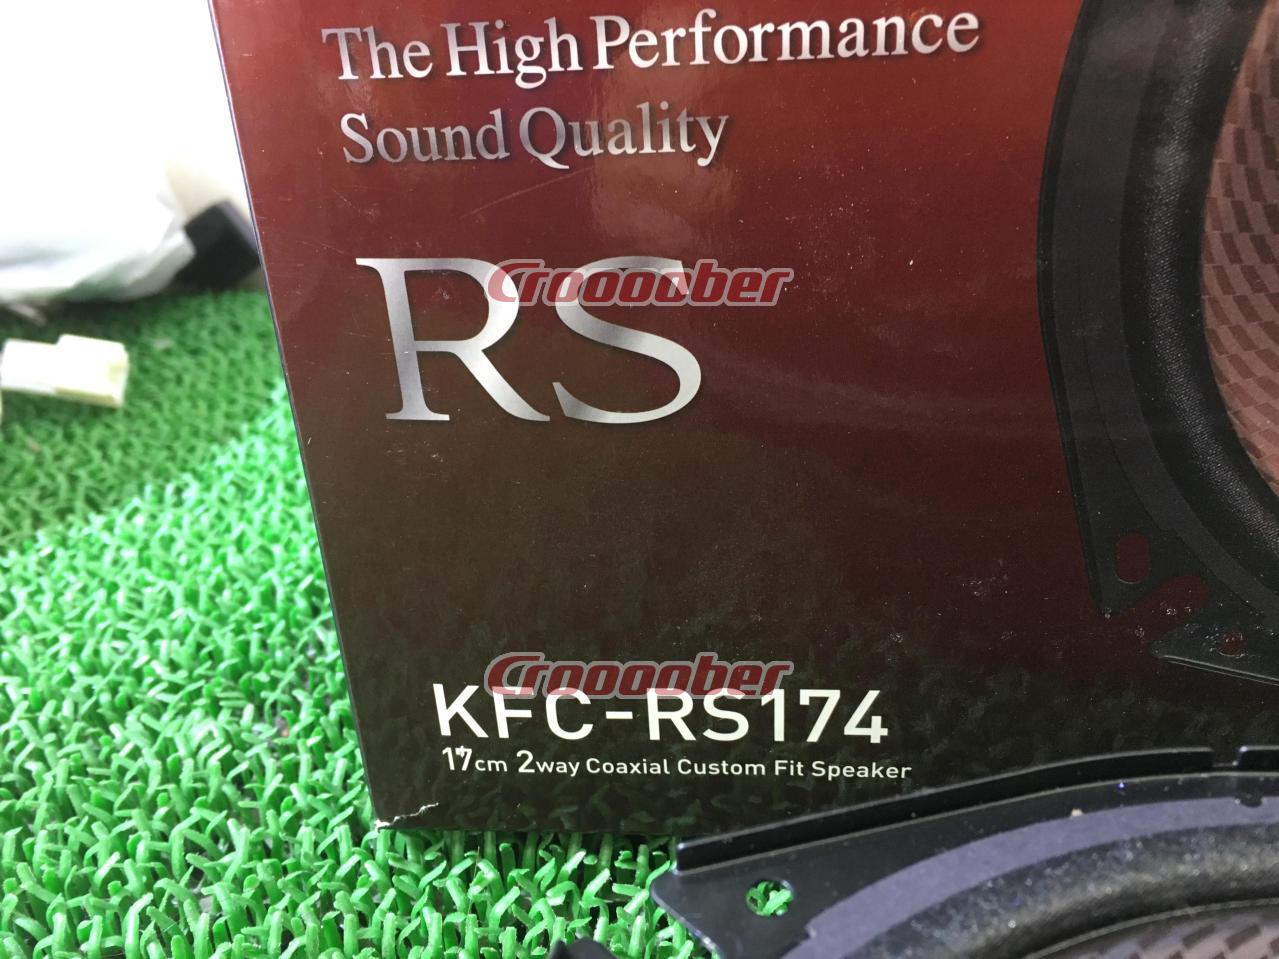 KENWOOD KFC-RS174 コアキシャルスピーカー 17cm 2020年モデル | スピーカー 埋め込みスピーカーパーツの通販なら |  Croooober(クルーバー)